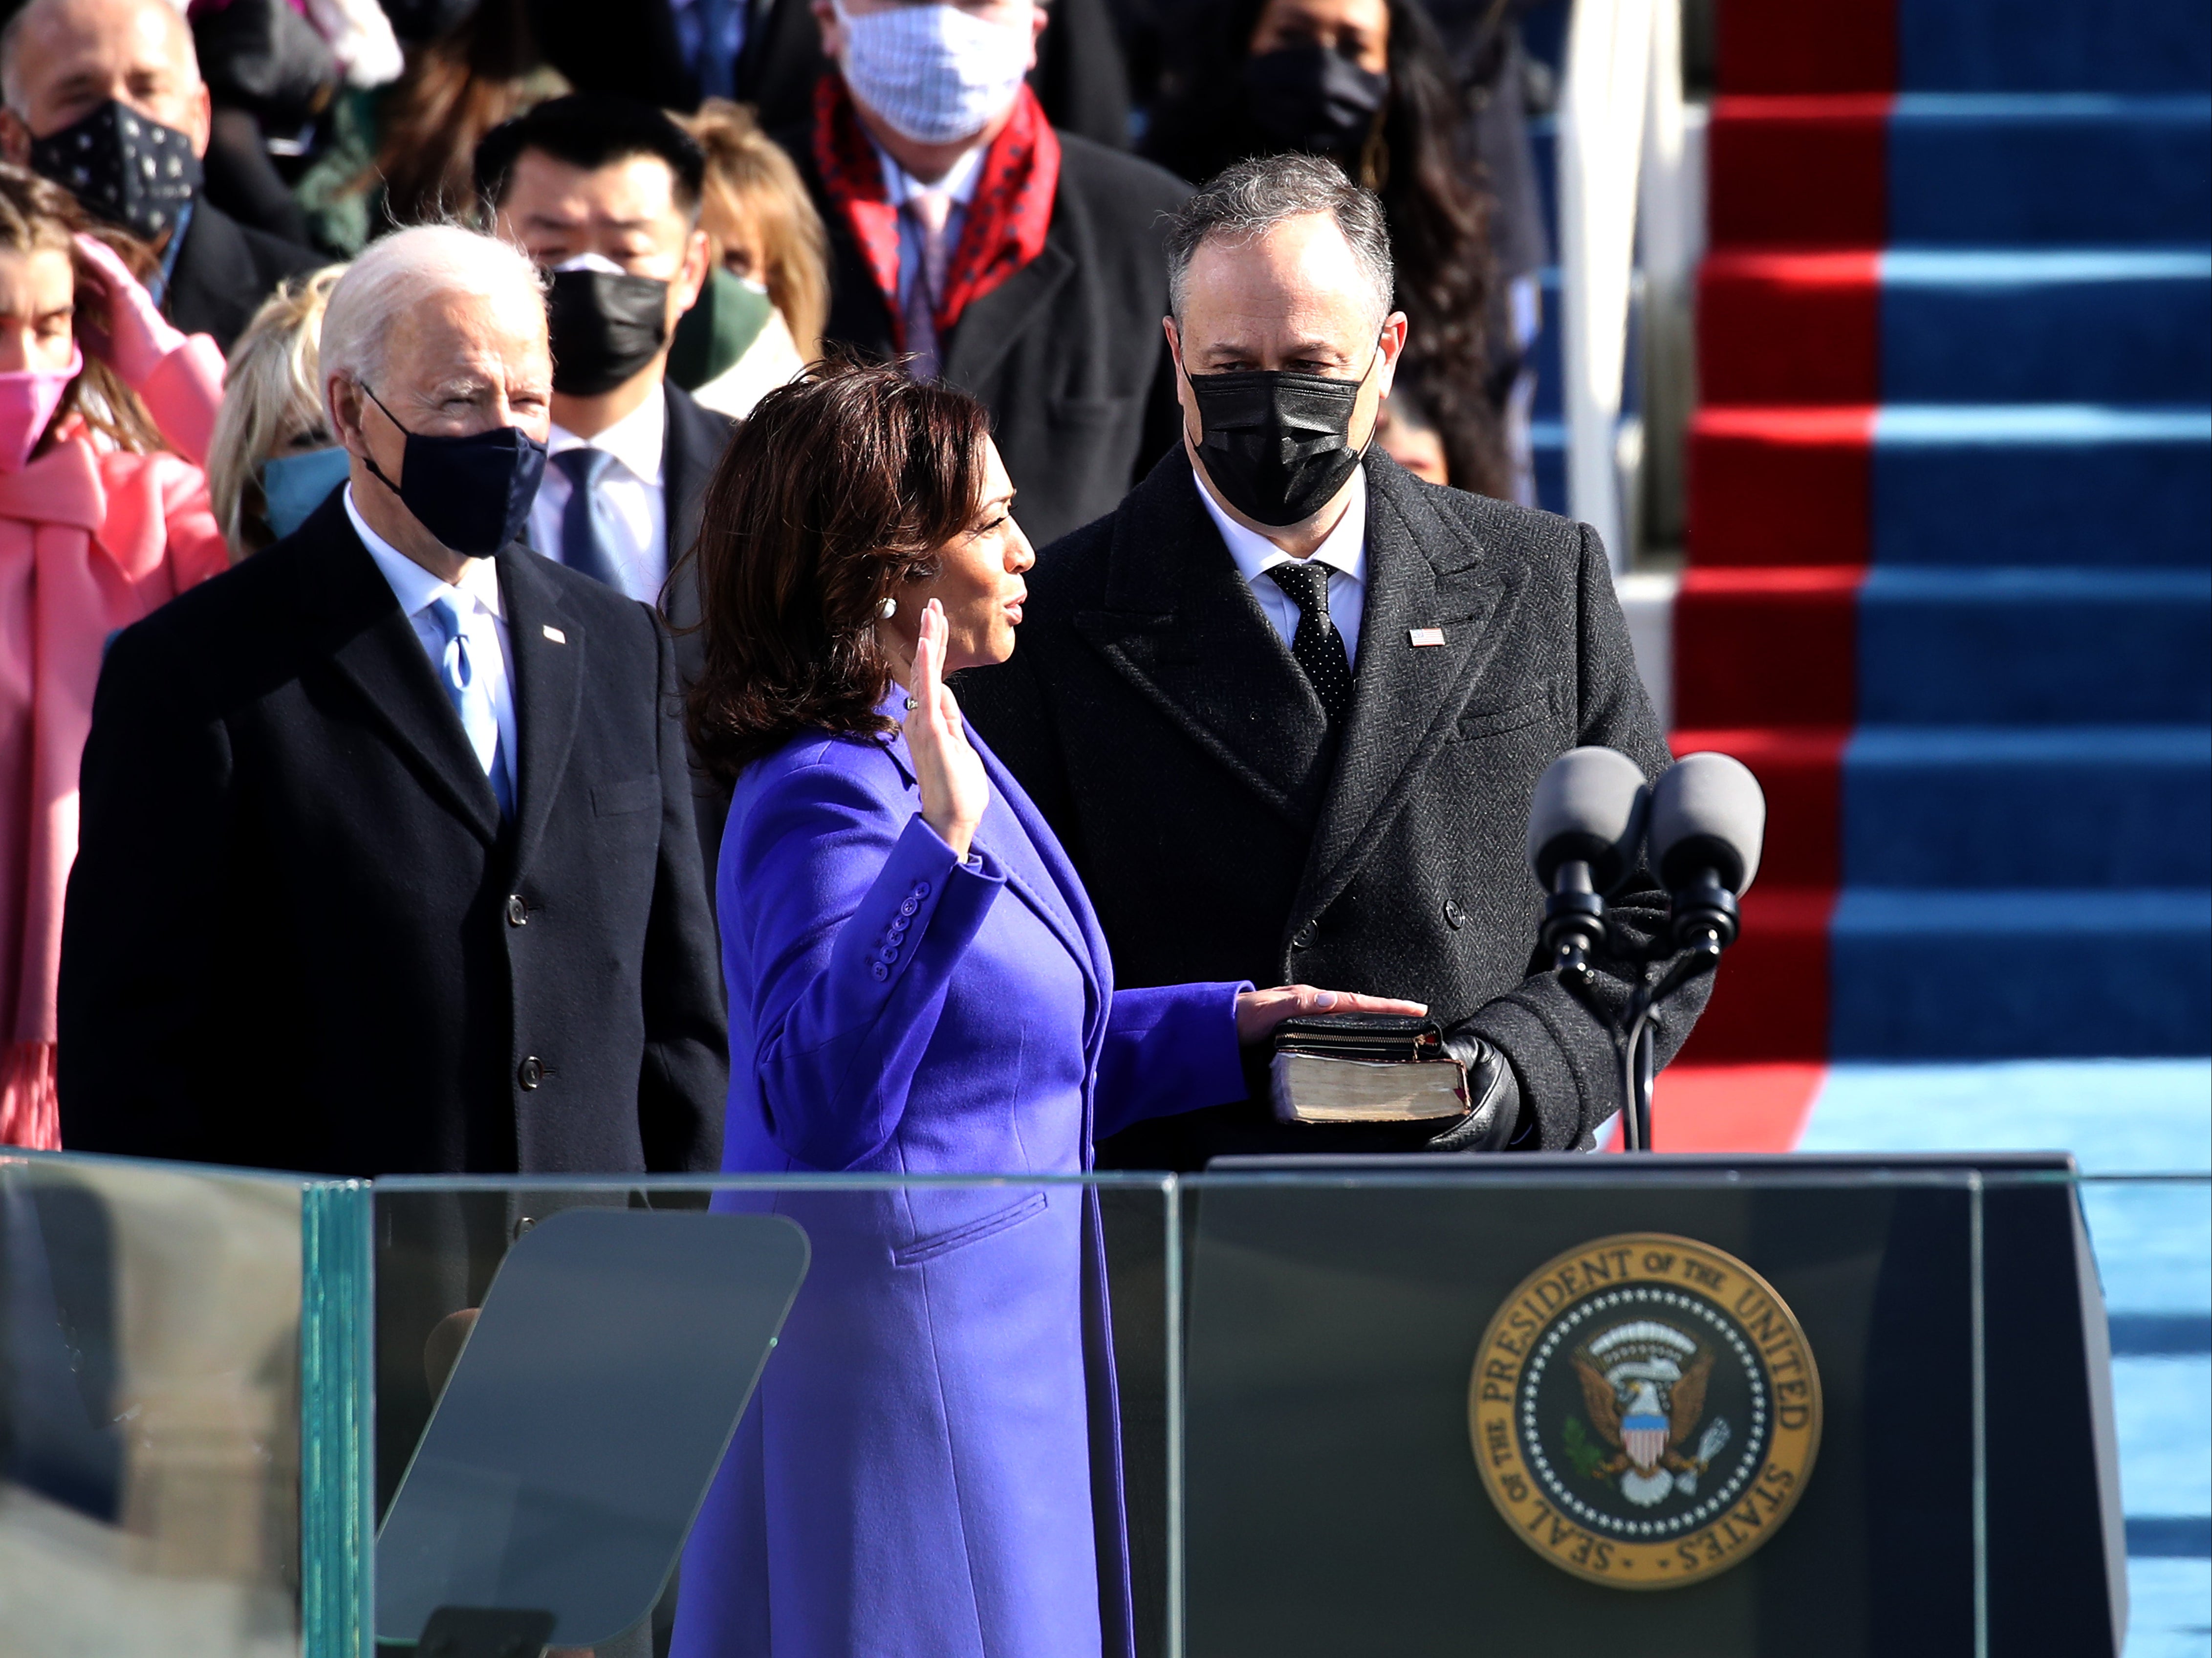 Kamala Harris is sworn in as US Vice President with her husband Doug Emhoff and President Joe Biden looking on